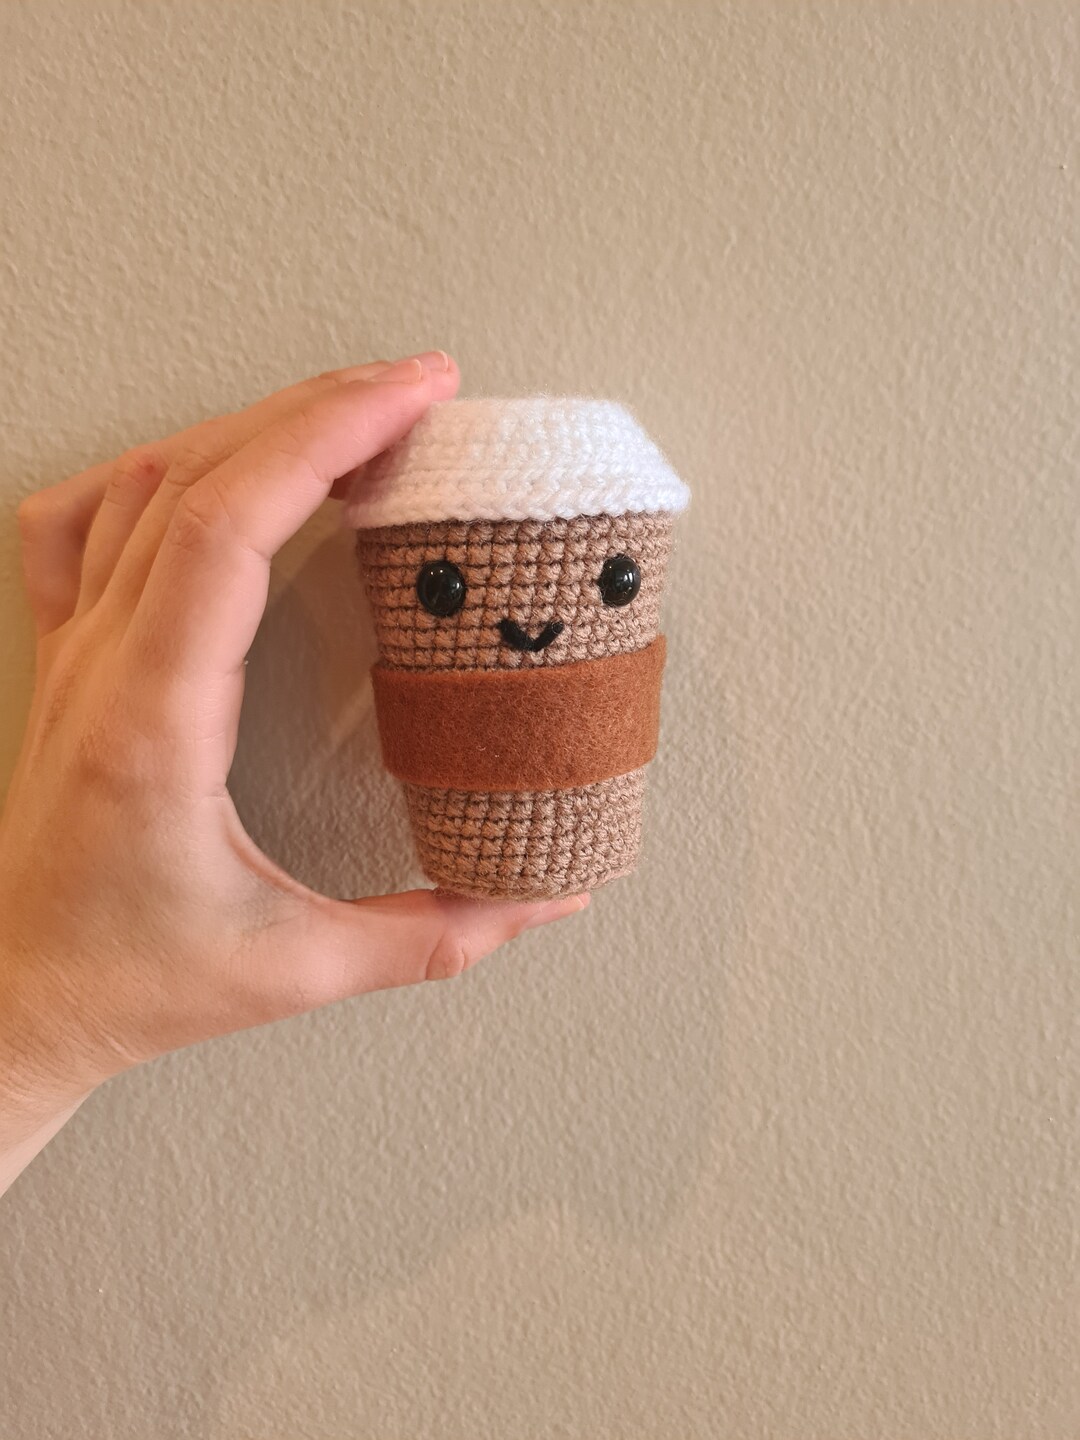 Crochet Cafe (How To Amigurumi) – Hipstitch